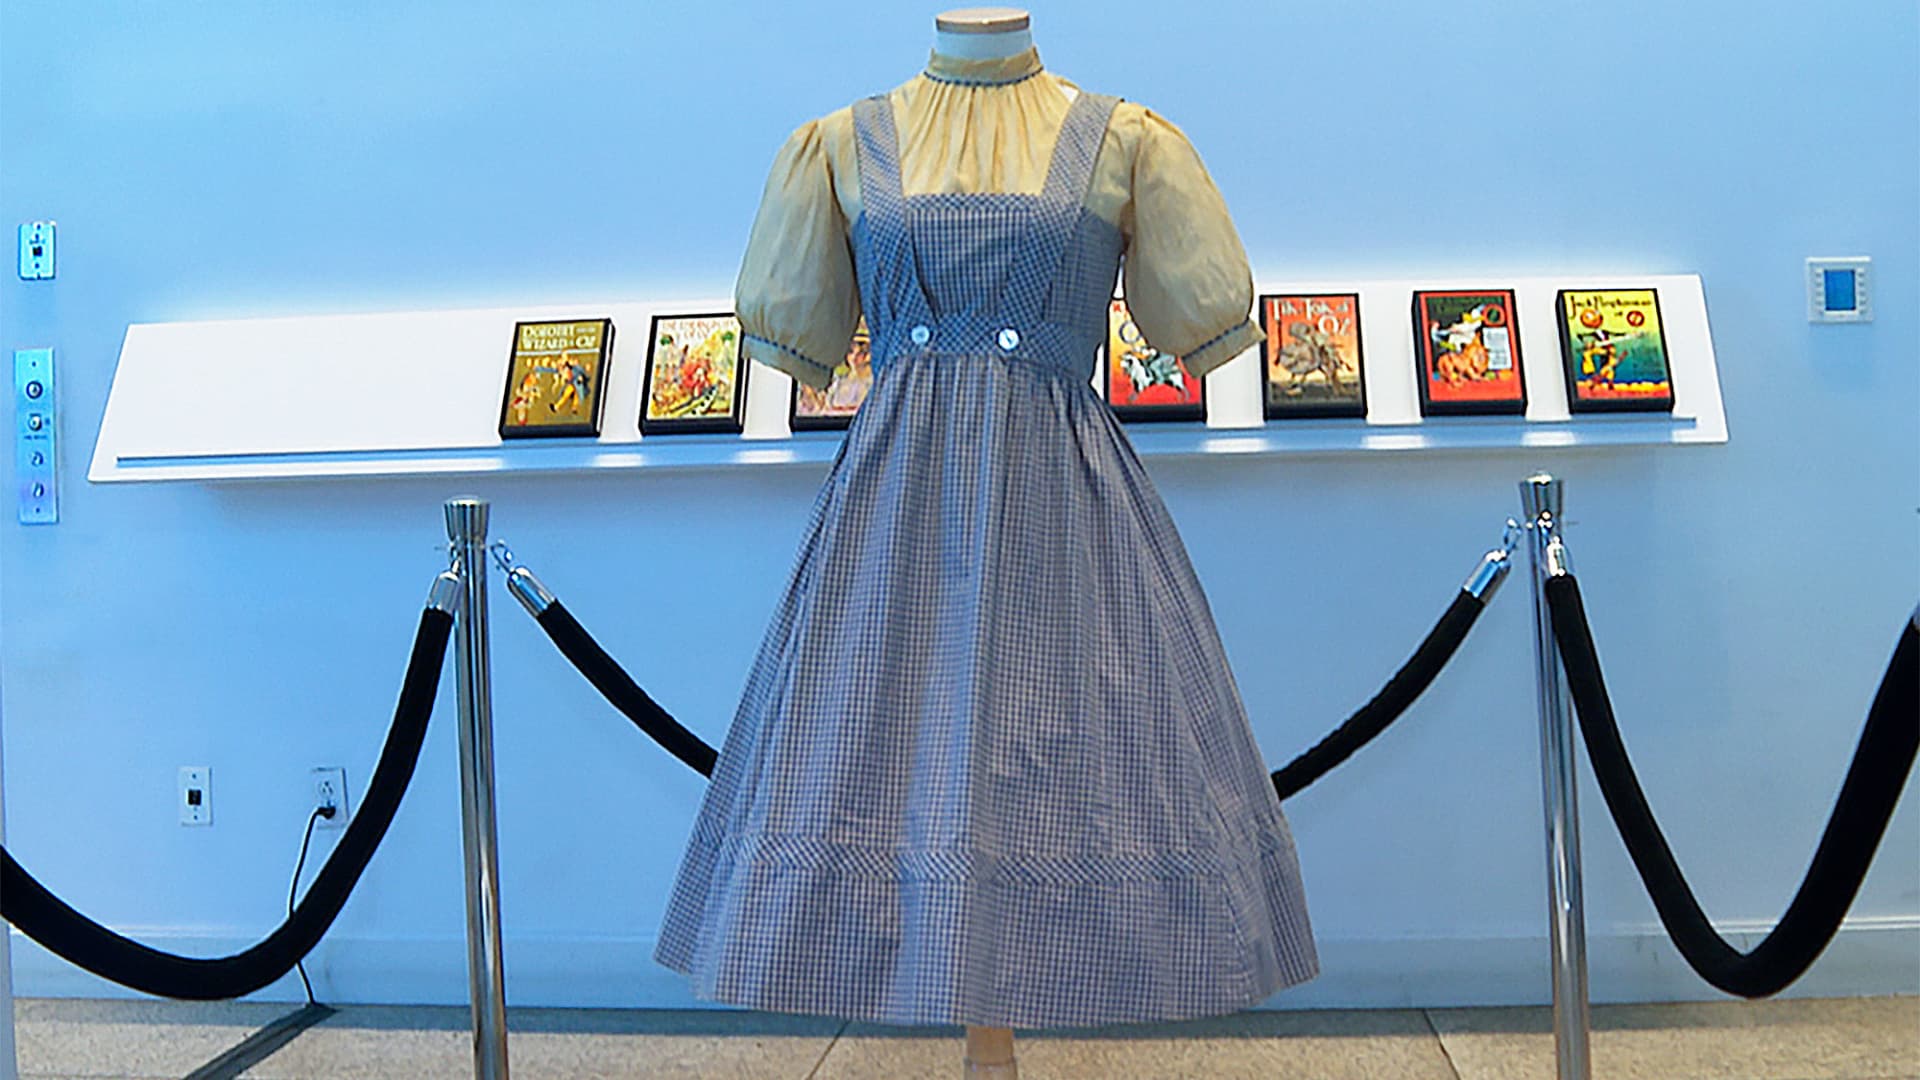 Judge blocks auction of ‘Wizard of Oz’ dress by Catholic University